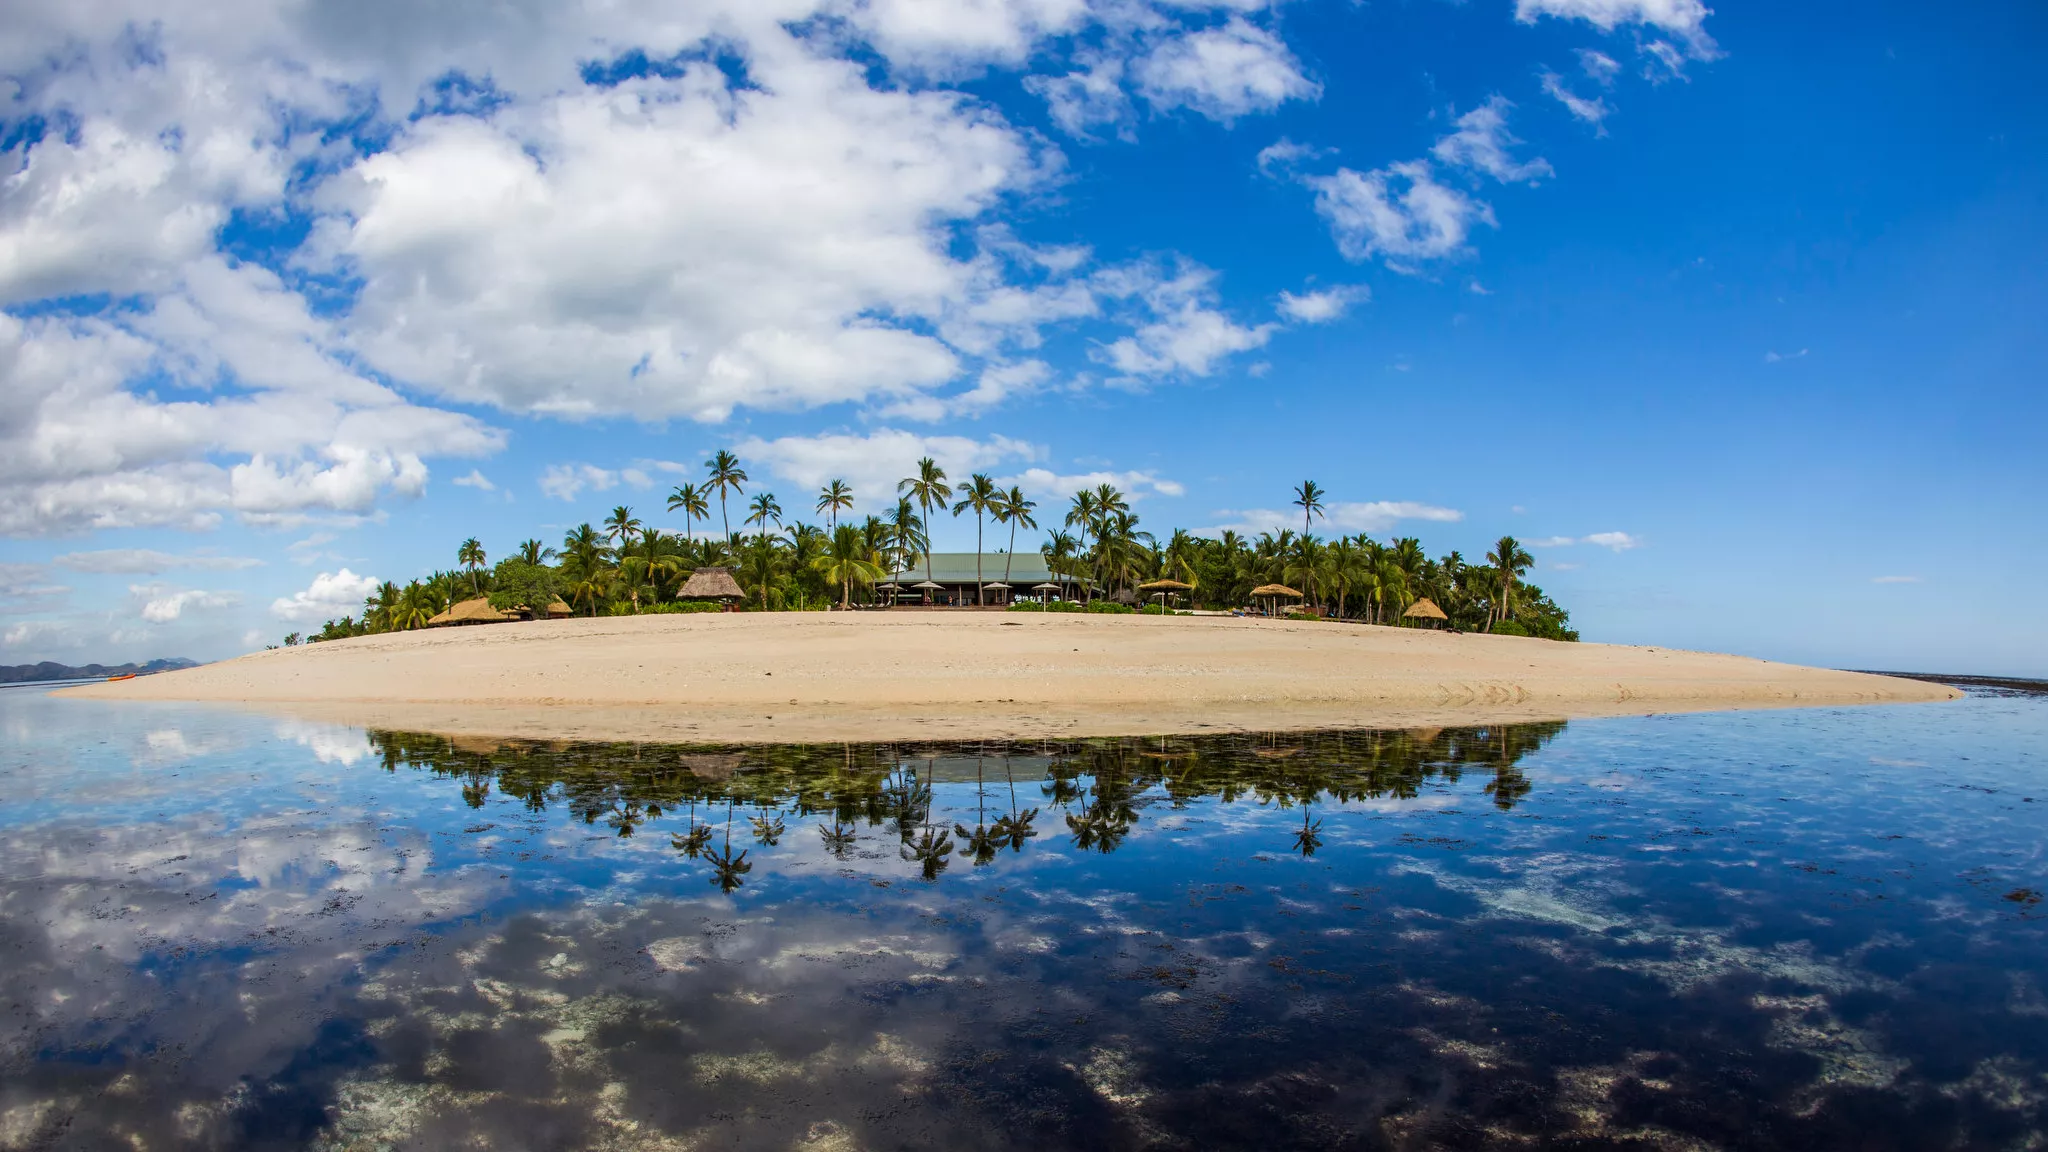 Tavarua in Fiji, Australia and Oceania | Surfing,Beaches - Rated 0.8